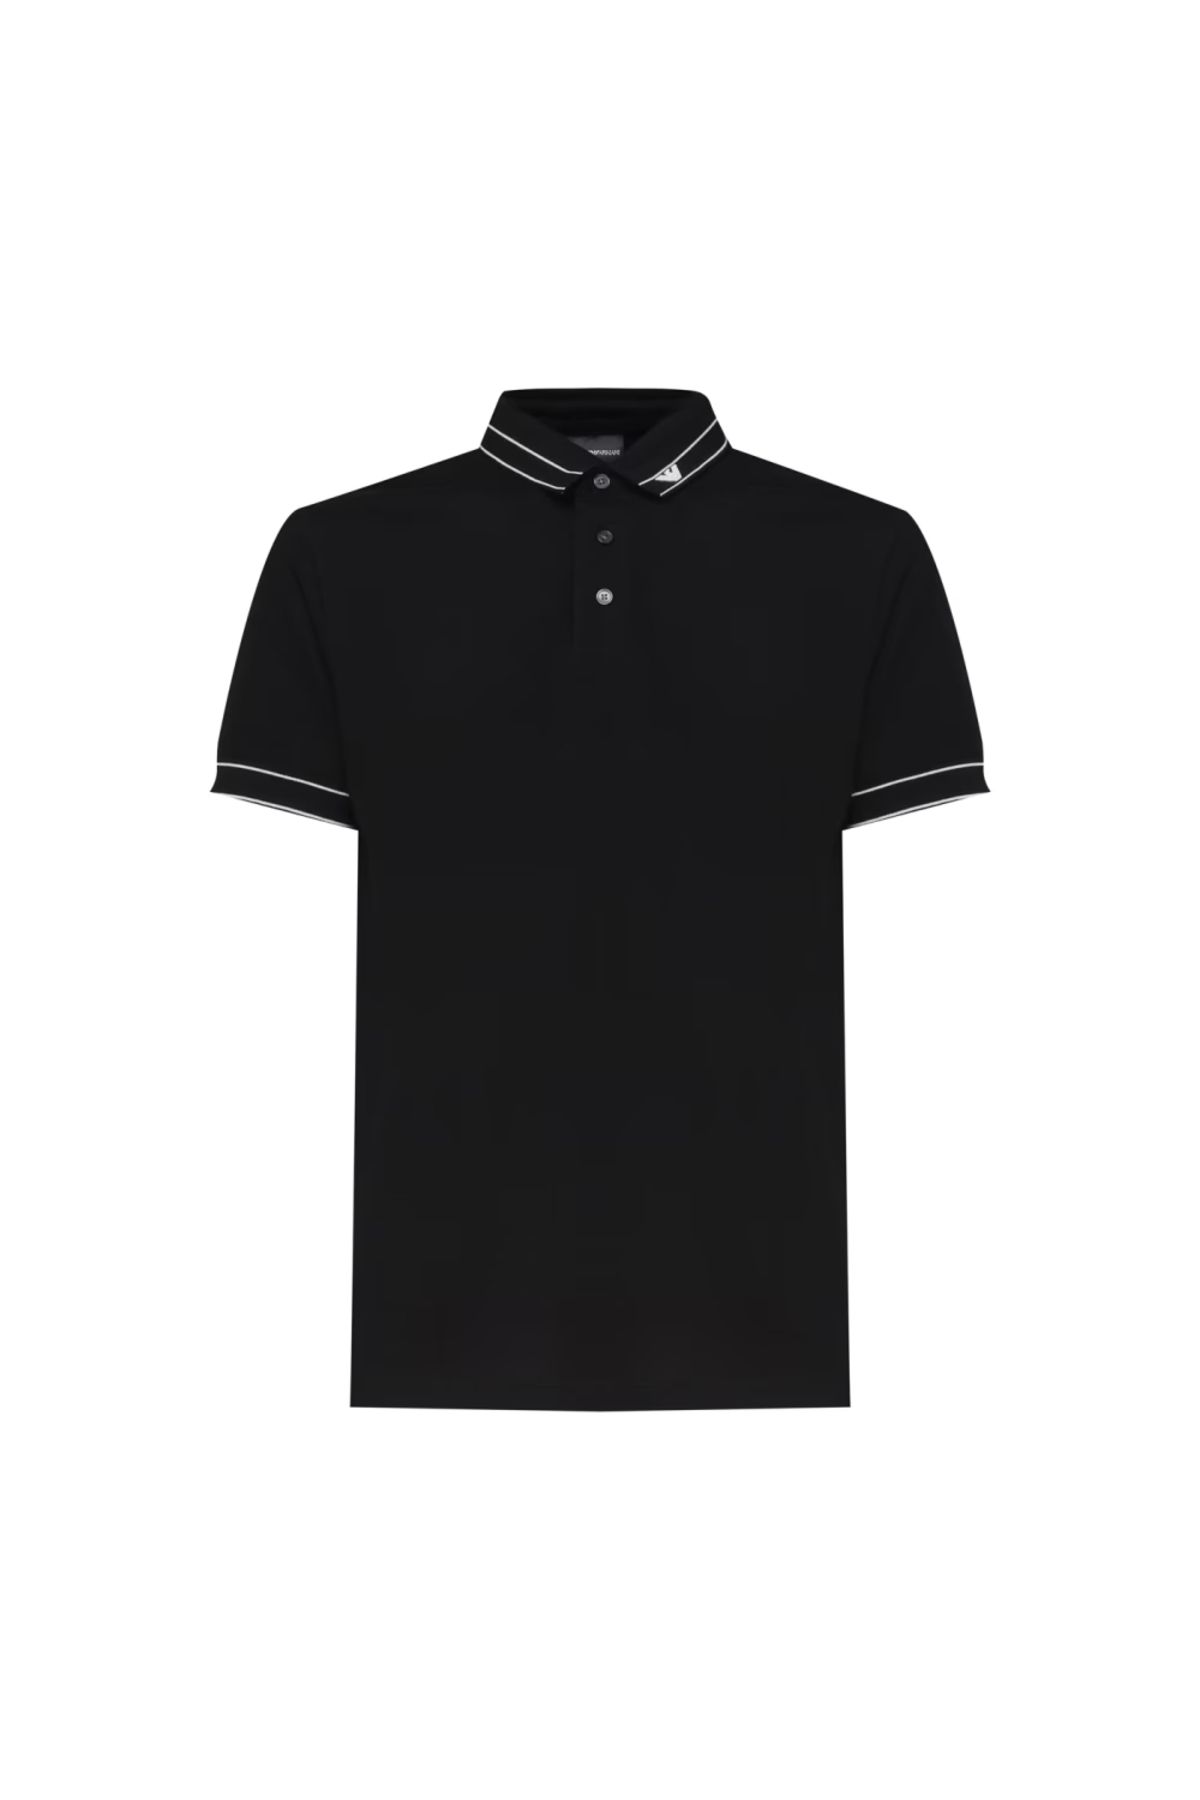 Emporio Armani Erkek Logolu Polo Yakalı Kısa Kollu Düğmeli Siyah Polo Yaka T-Shirt 3D1FM4 1JCYZ-0068